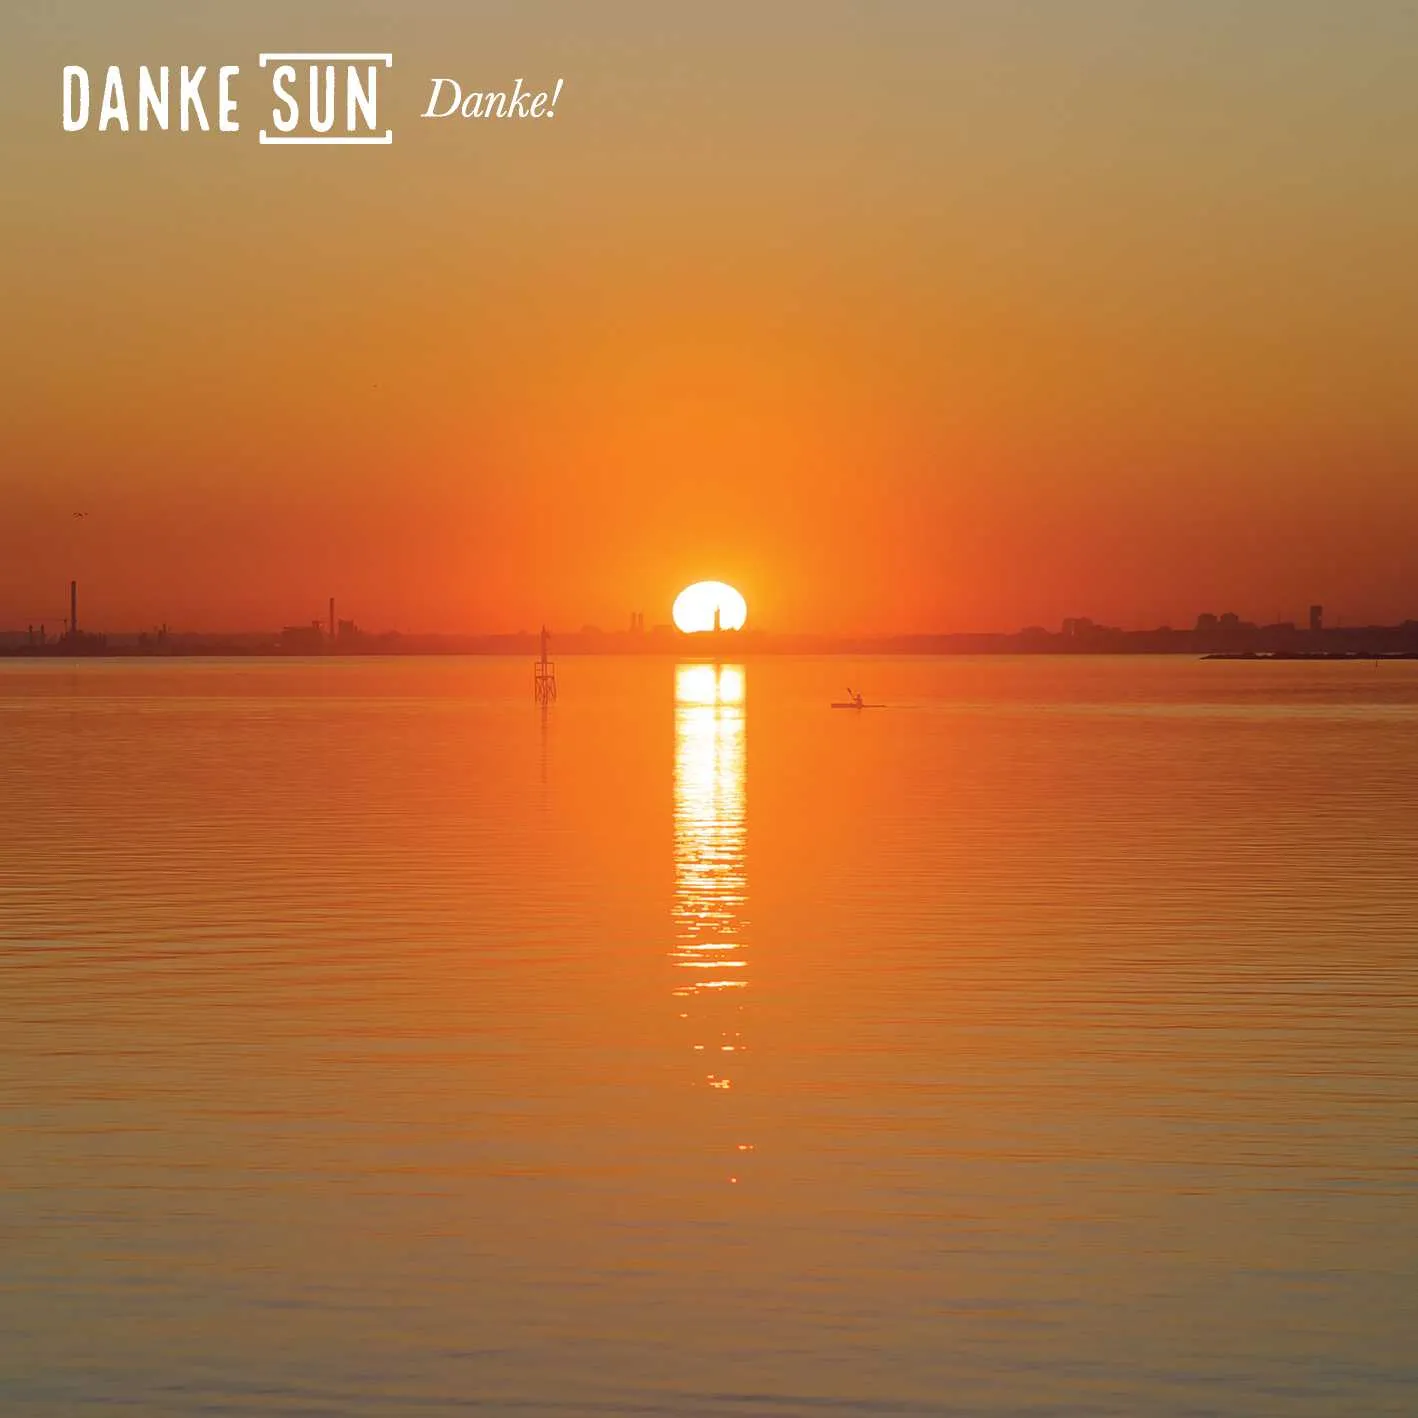 Cover of Danke Sun’s “Danke!”